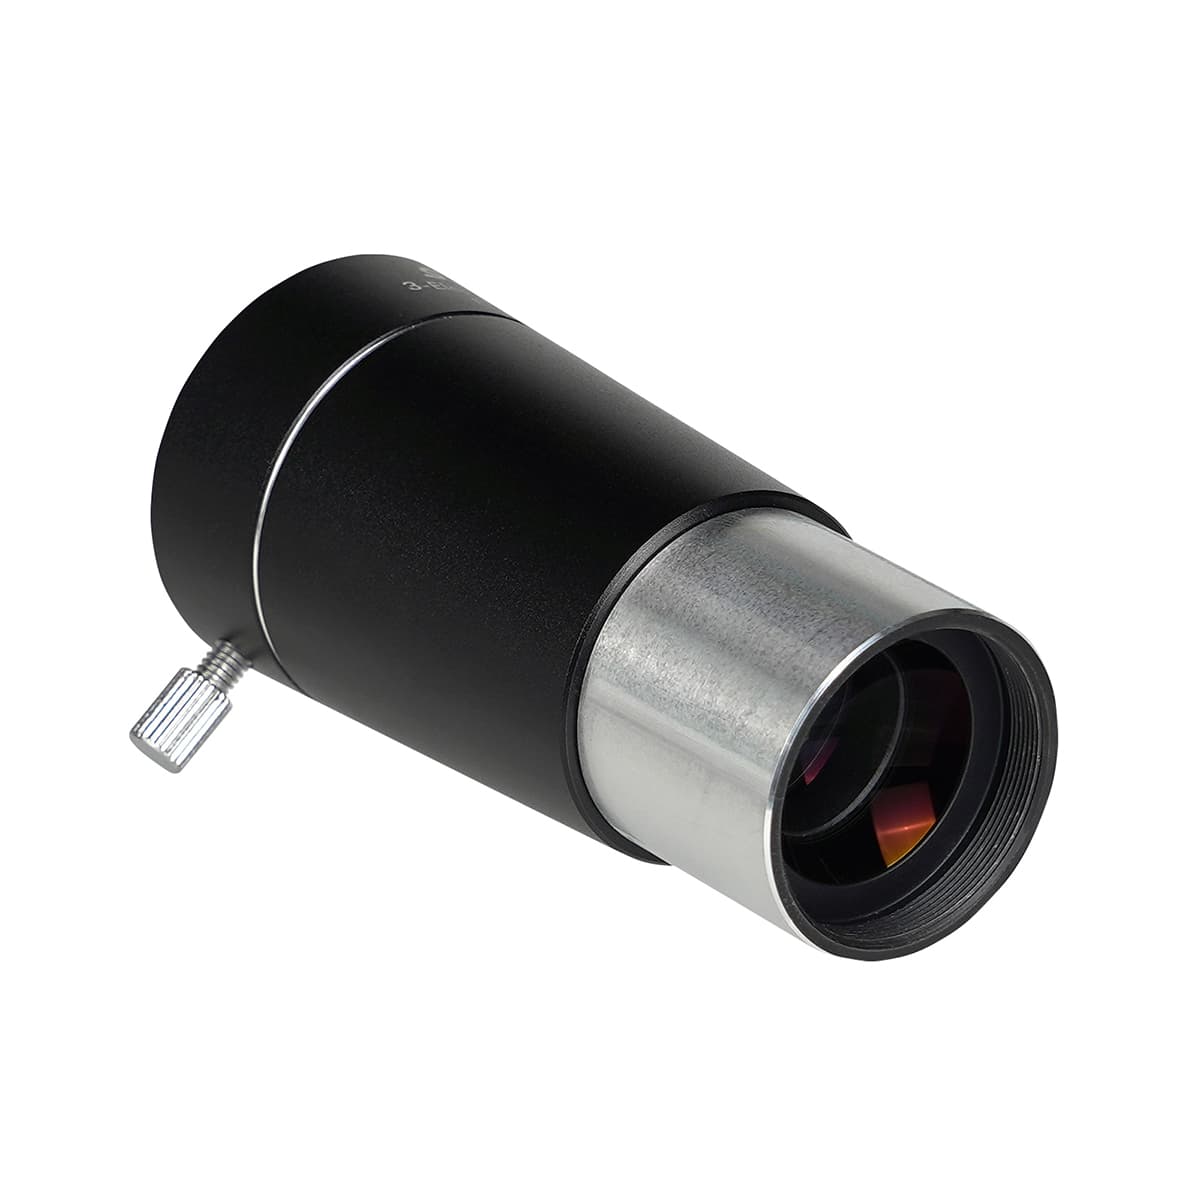 SV213 1.25" 3x Barlow Lens